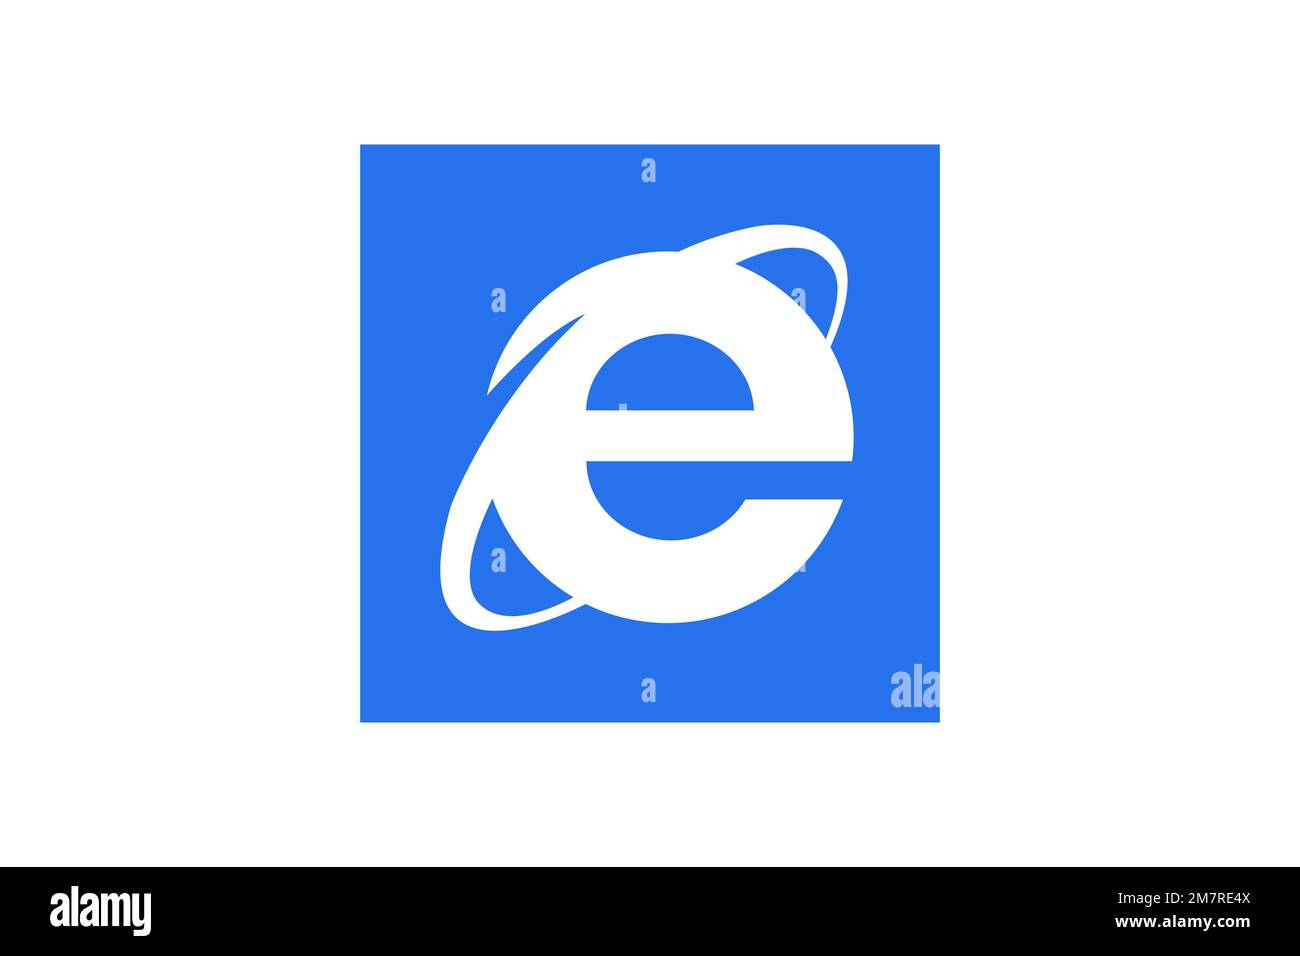 Internet Explorer 10, Logo, White background Stock Photo - Alamy